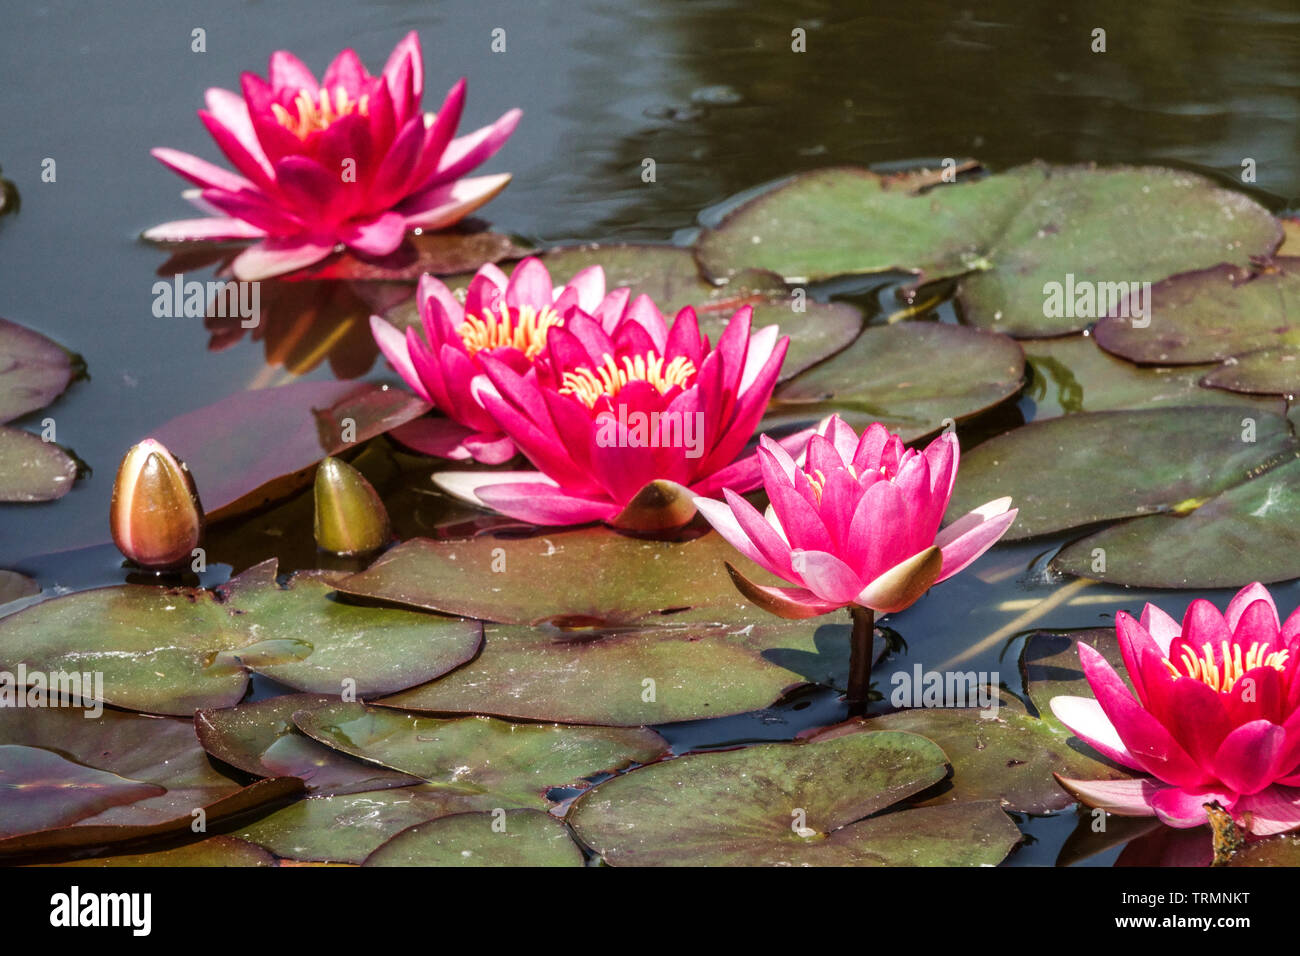 Water lily flower, garden pond Stock Photo